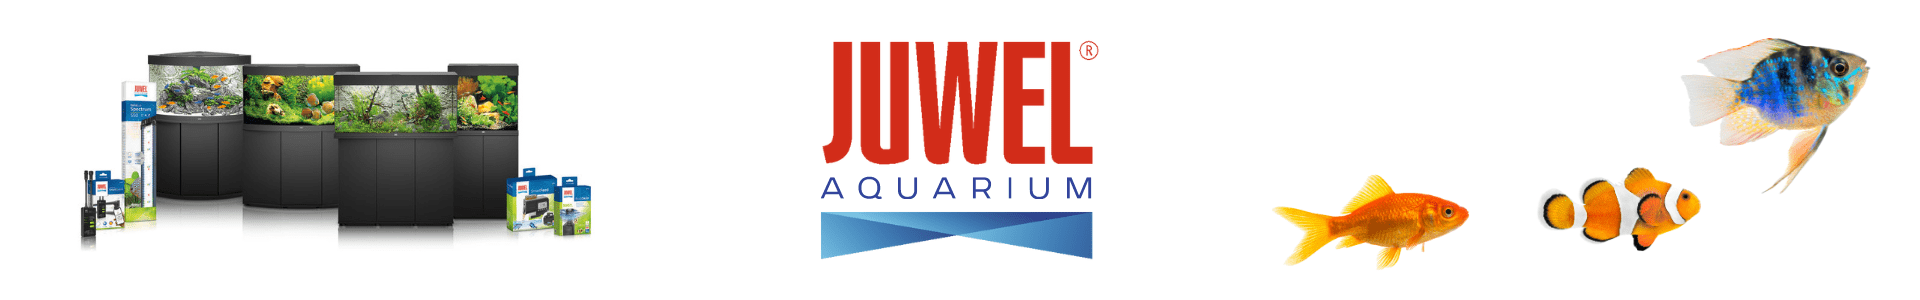 juwell-aquarium-brand